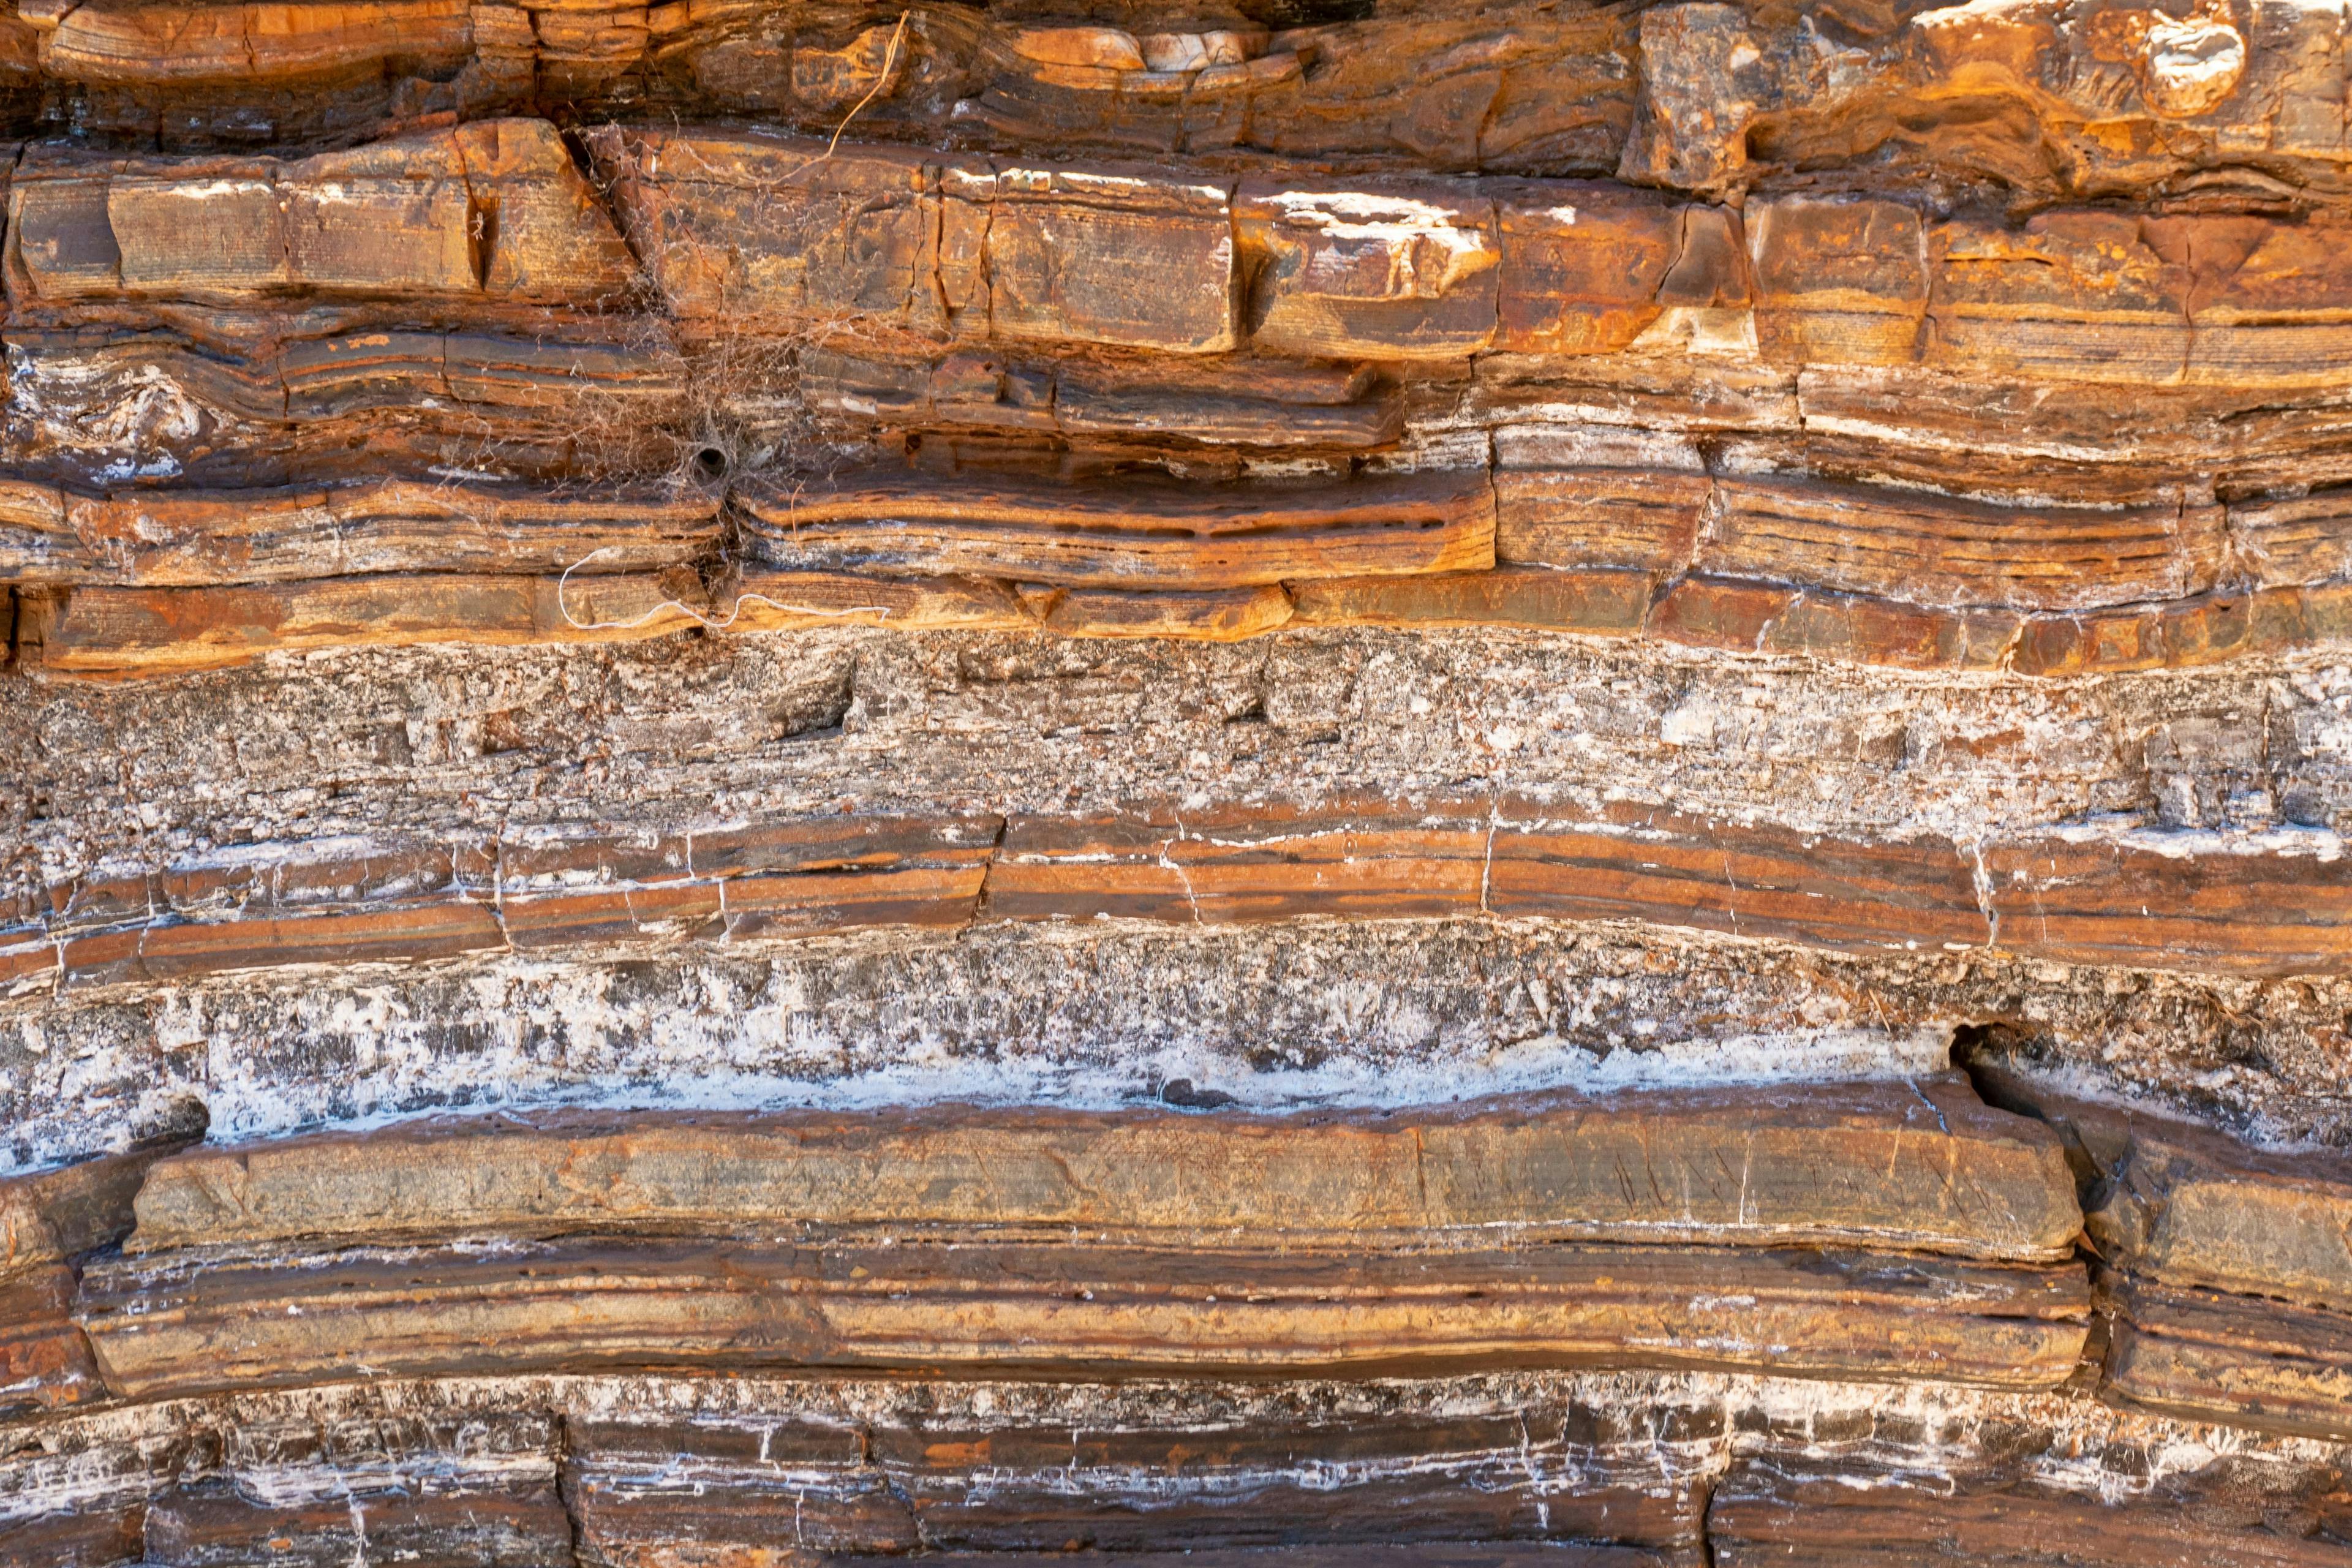 Sediment and rock layers at Karijini National Park in Dales Gorge including natural asbestos | Image Credit: © MXW Photo - stock.adobe.com